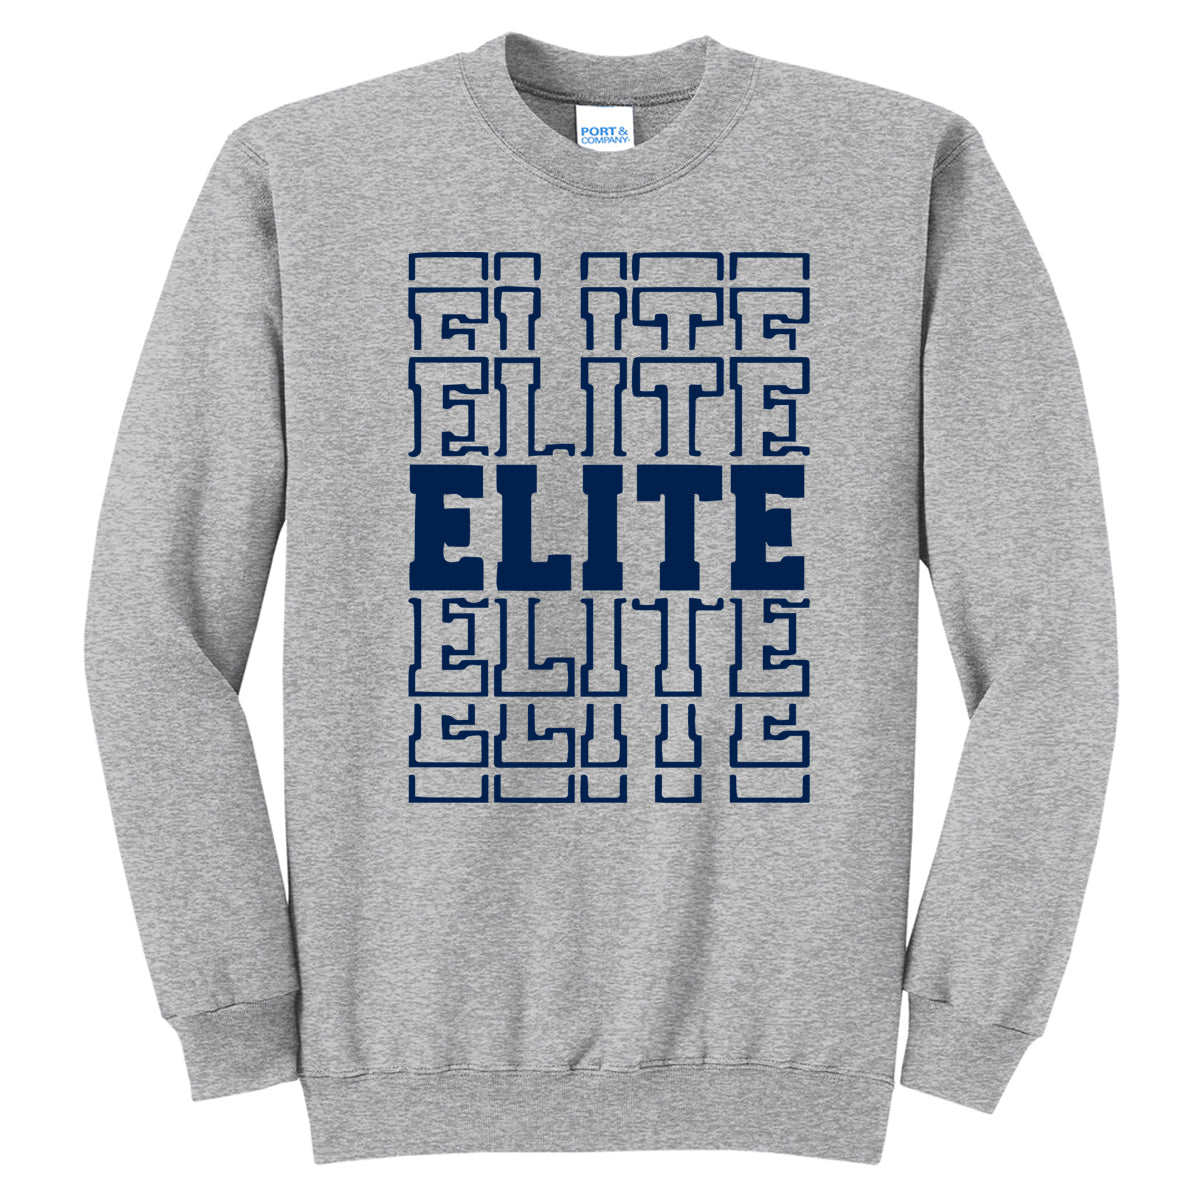 Elite - Elite Elite Elite - Athletic Heather (Tee/Sweatshirt) - Southern Grace Creations